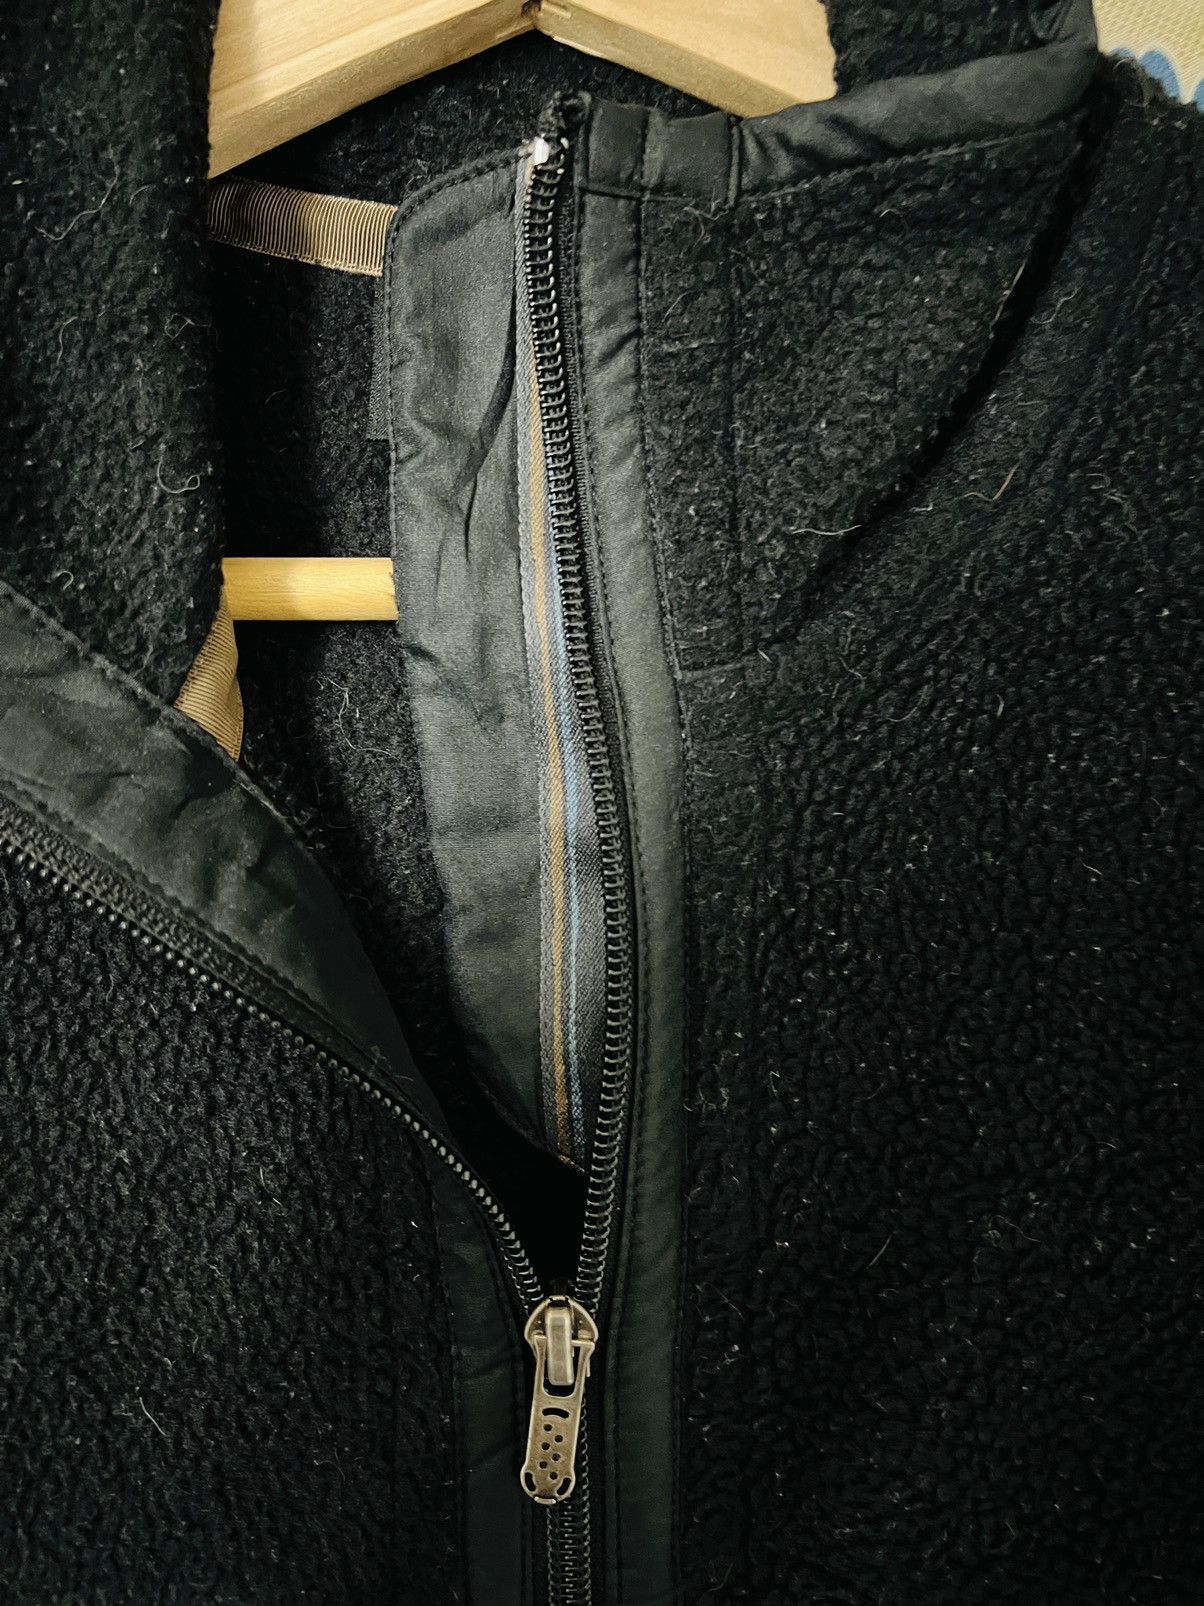 Patagonia Synchilla Full Zip Fleece Jacket - 7